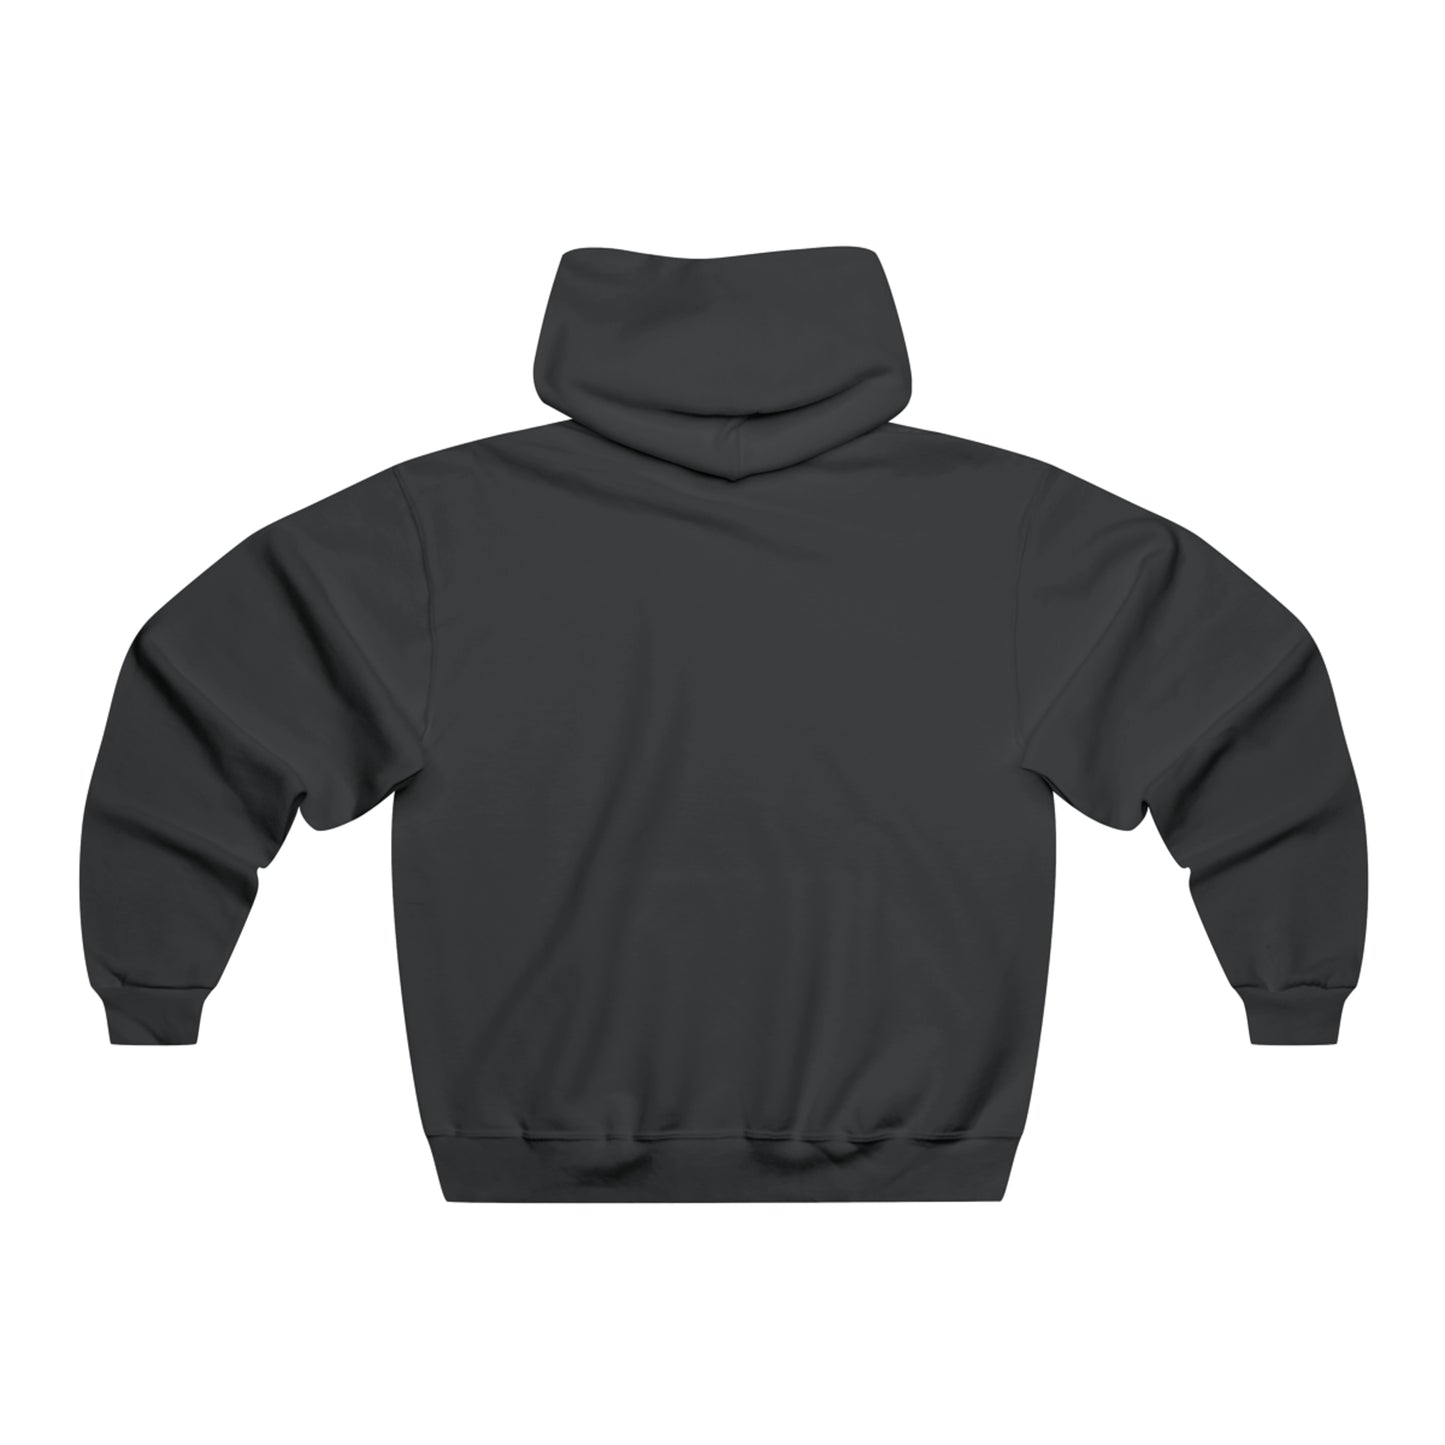 UHURU NUBLEND® Hooded Sweatshirt